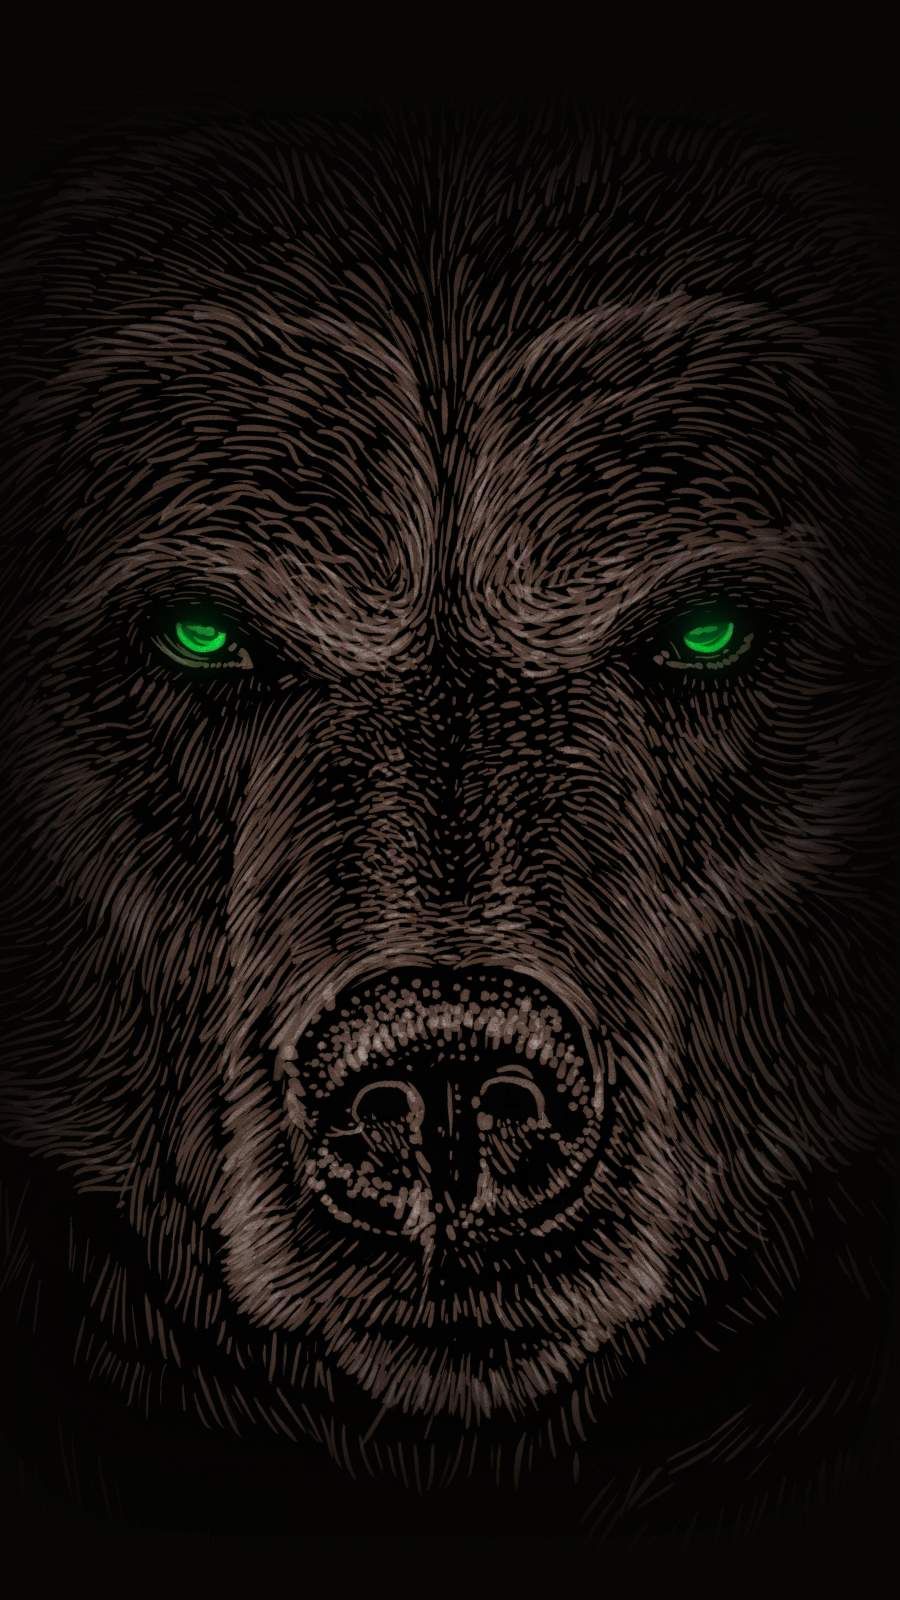 Grizzly Bear iPhone Wallpaper. Grizzly bear tattoos, Bear artwork, Bear tattoo designs